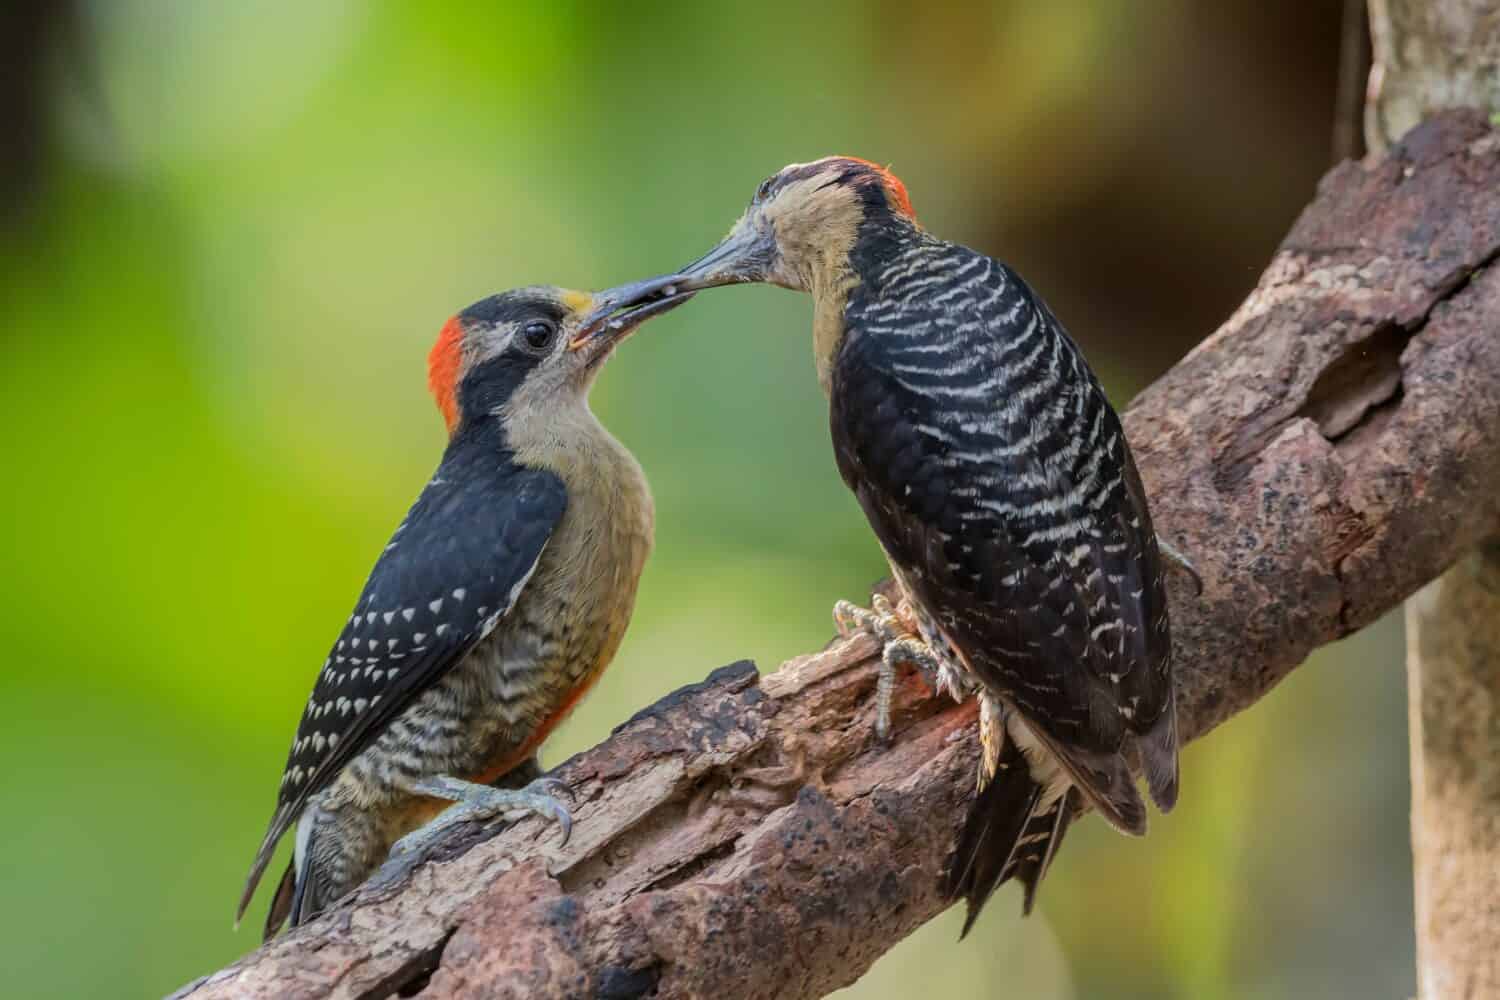 Black cheeked woodpecker (Melanerpes pucherani)